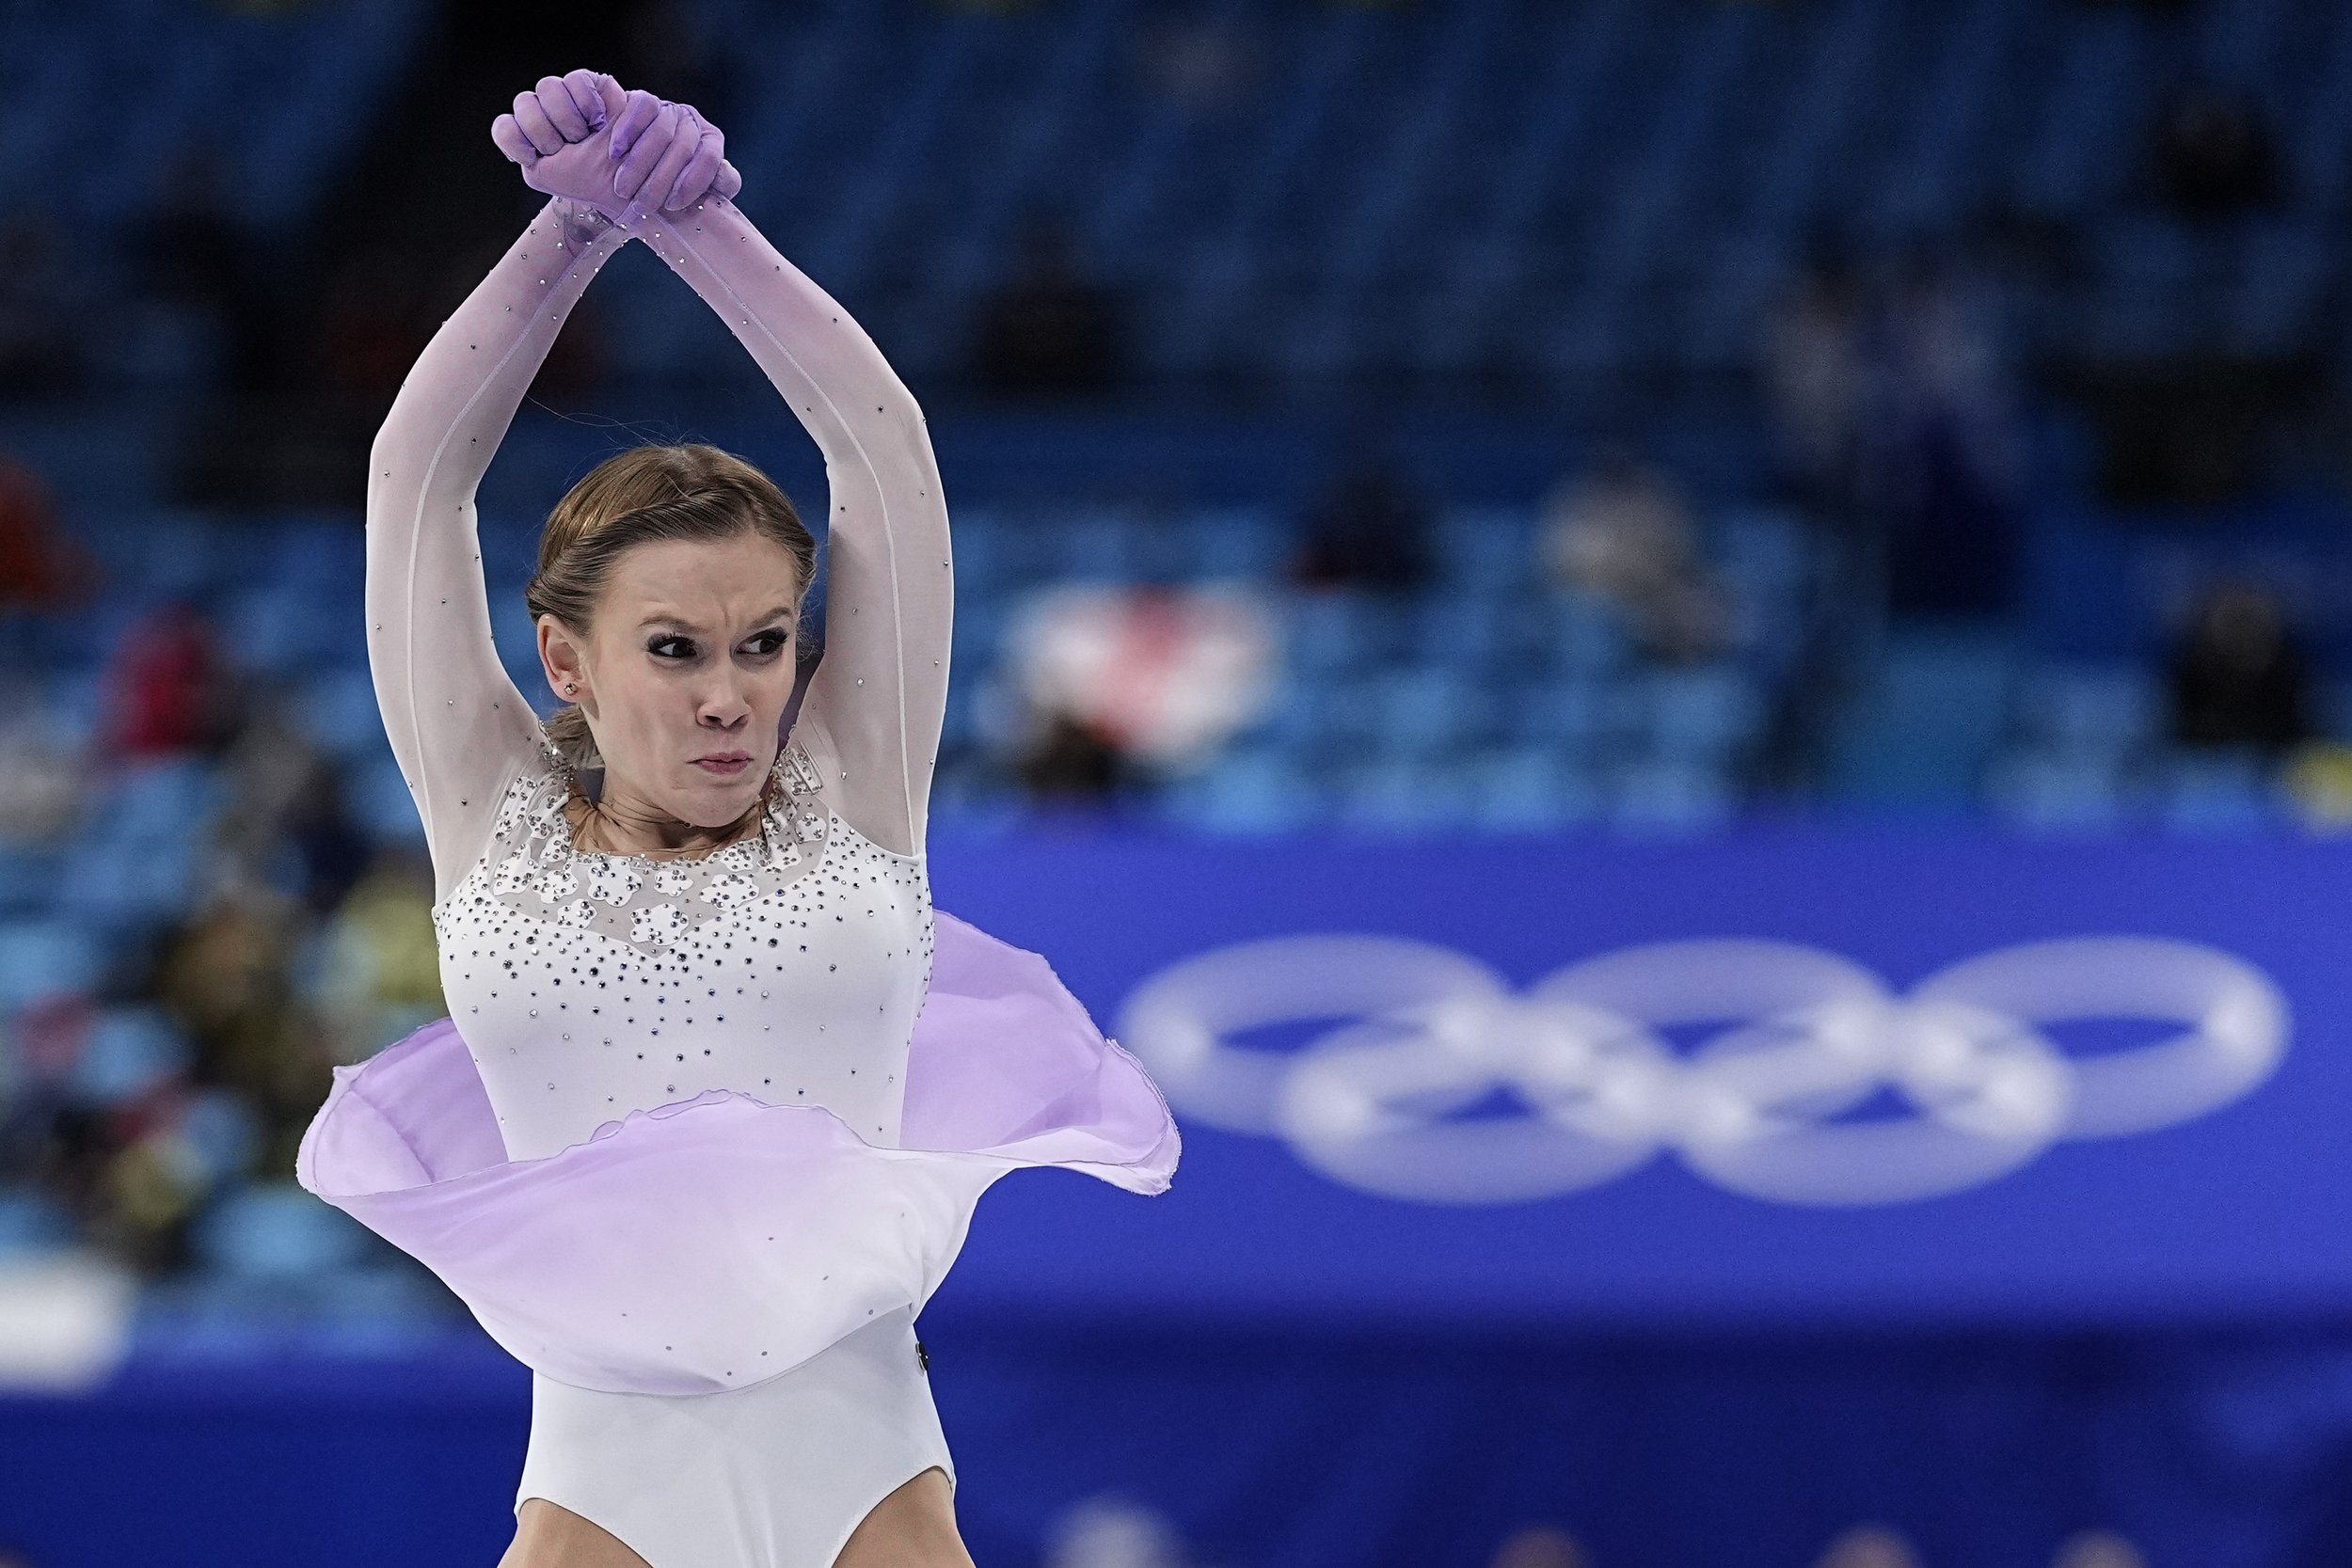  Ekaterina Kurakova, of Poland, competes in the women's short program during the figure skating at the 2022 Winter Olympics, Tuesday, Feb. 15, 2022, in Beijing. (AP Photo/David J. Phillip) 